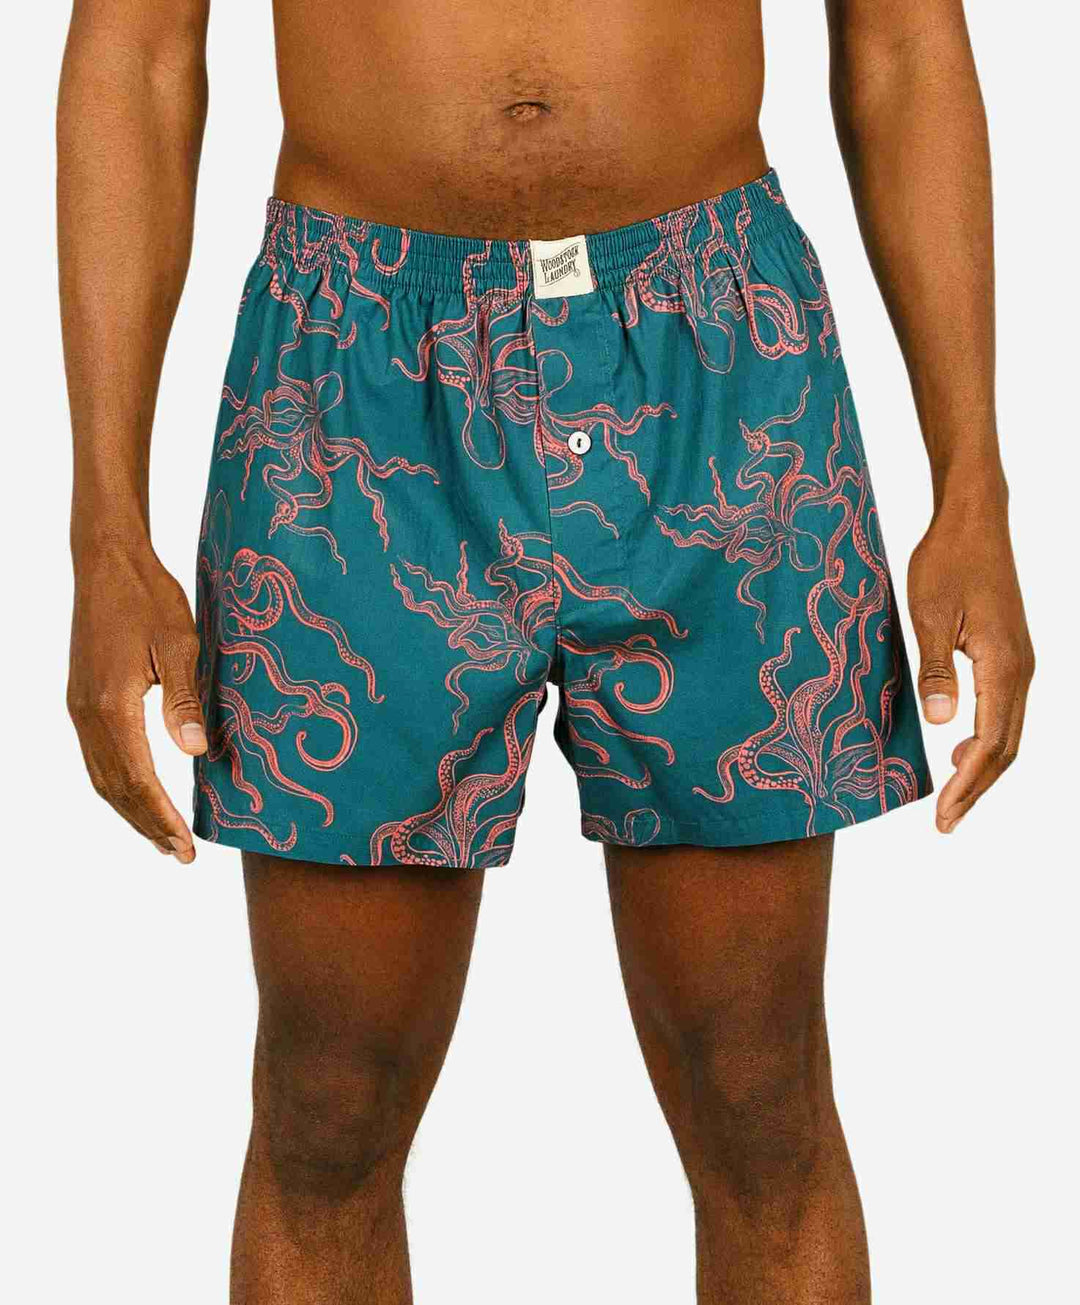 Mens boxer shorts - octopus pink